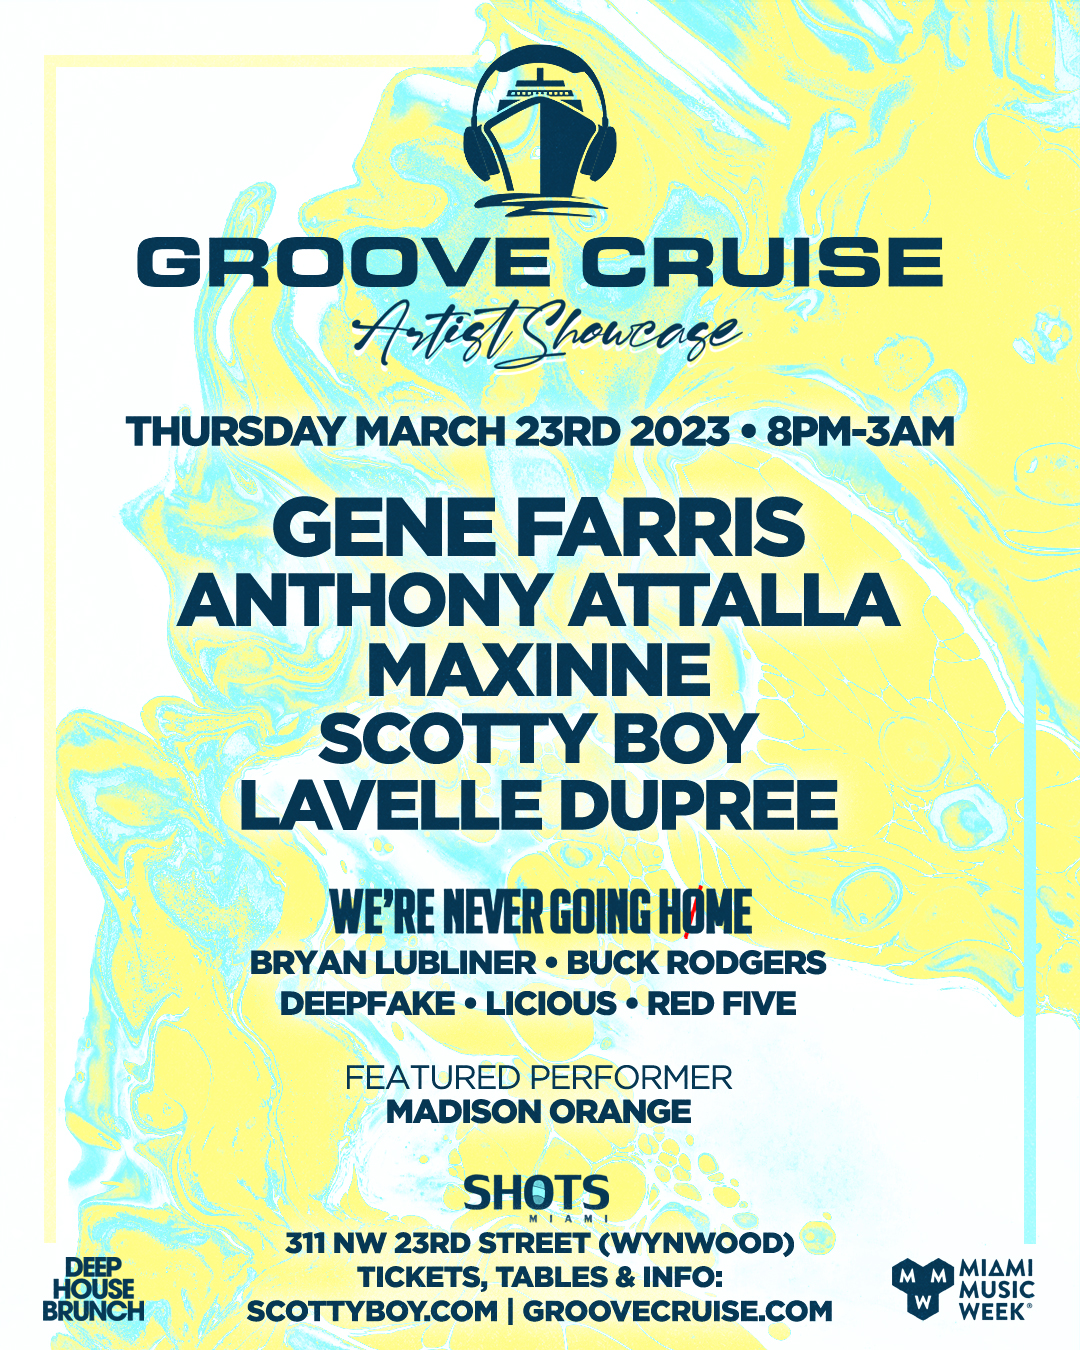 Groove Cruise: Miami Music Week [Artist Showcase] Image